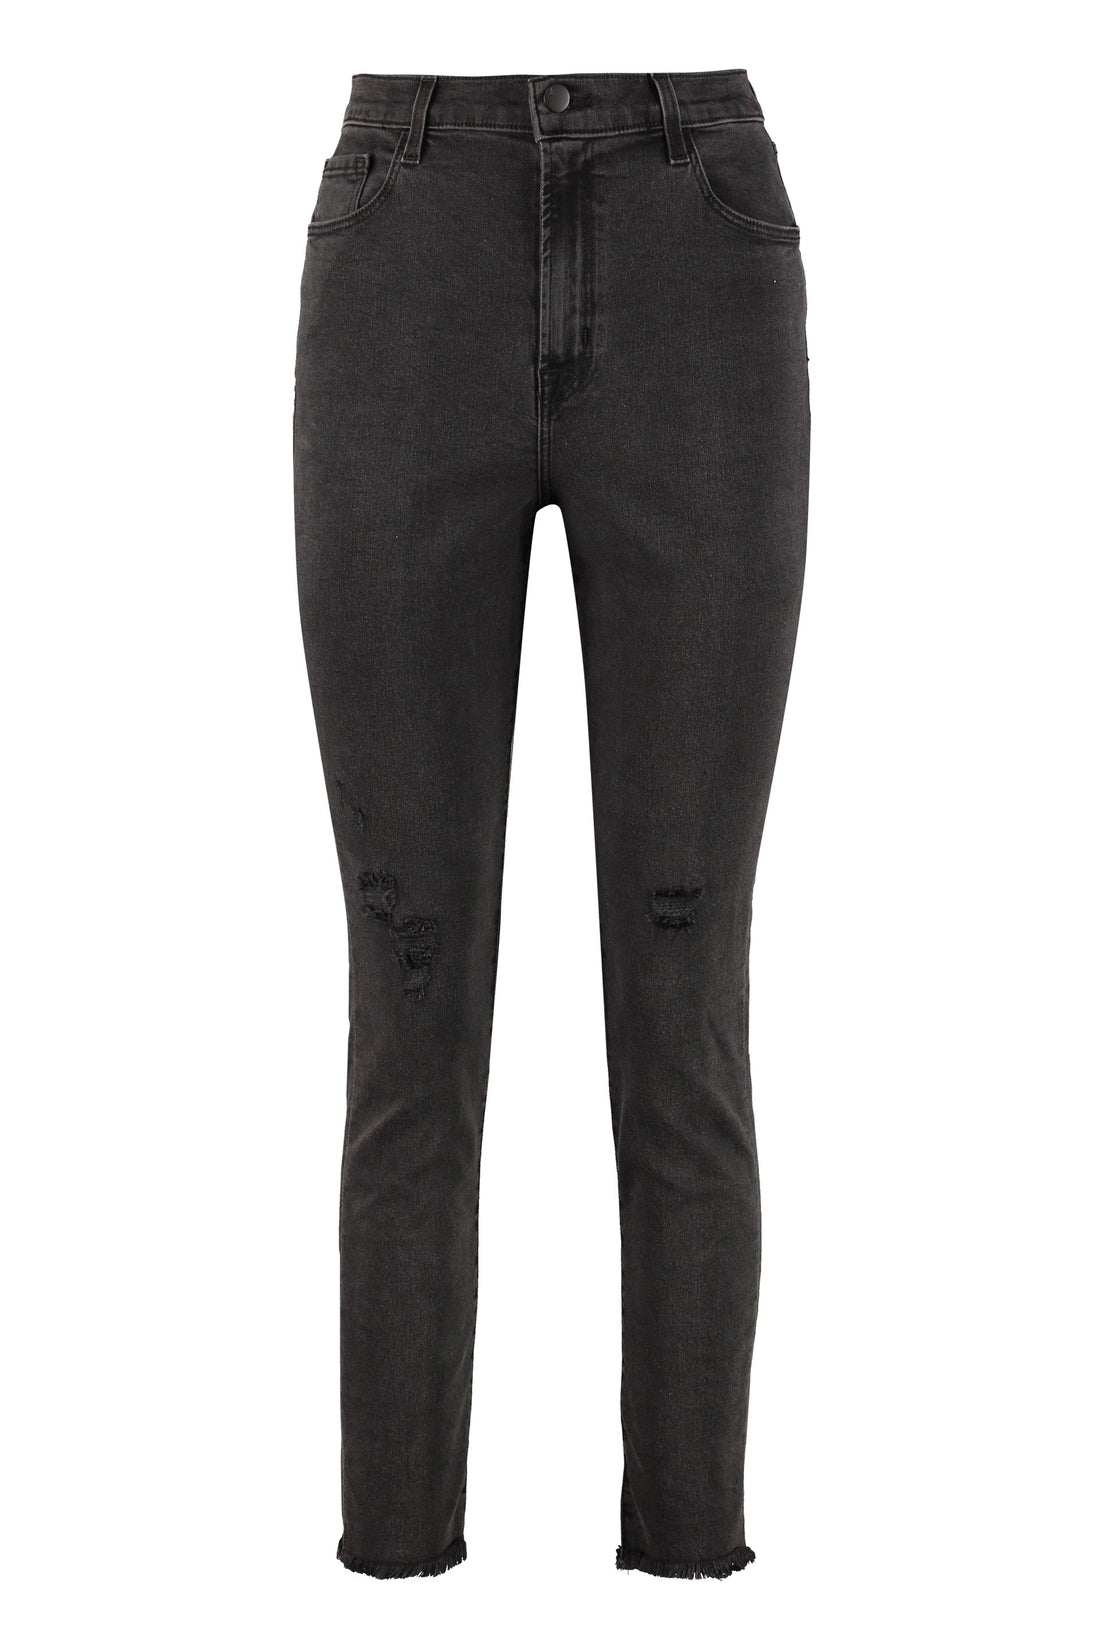 J Brand-OUTLET-SALE-Leenah high-rise skinny jeans-ARCHIVIST